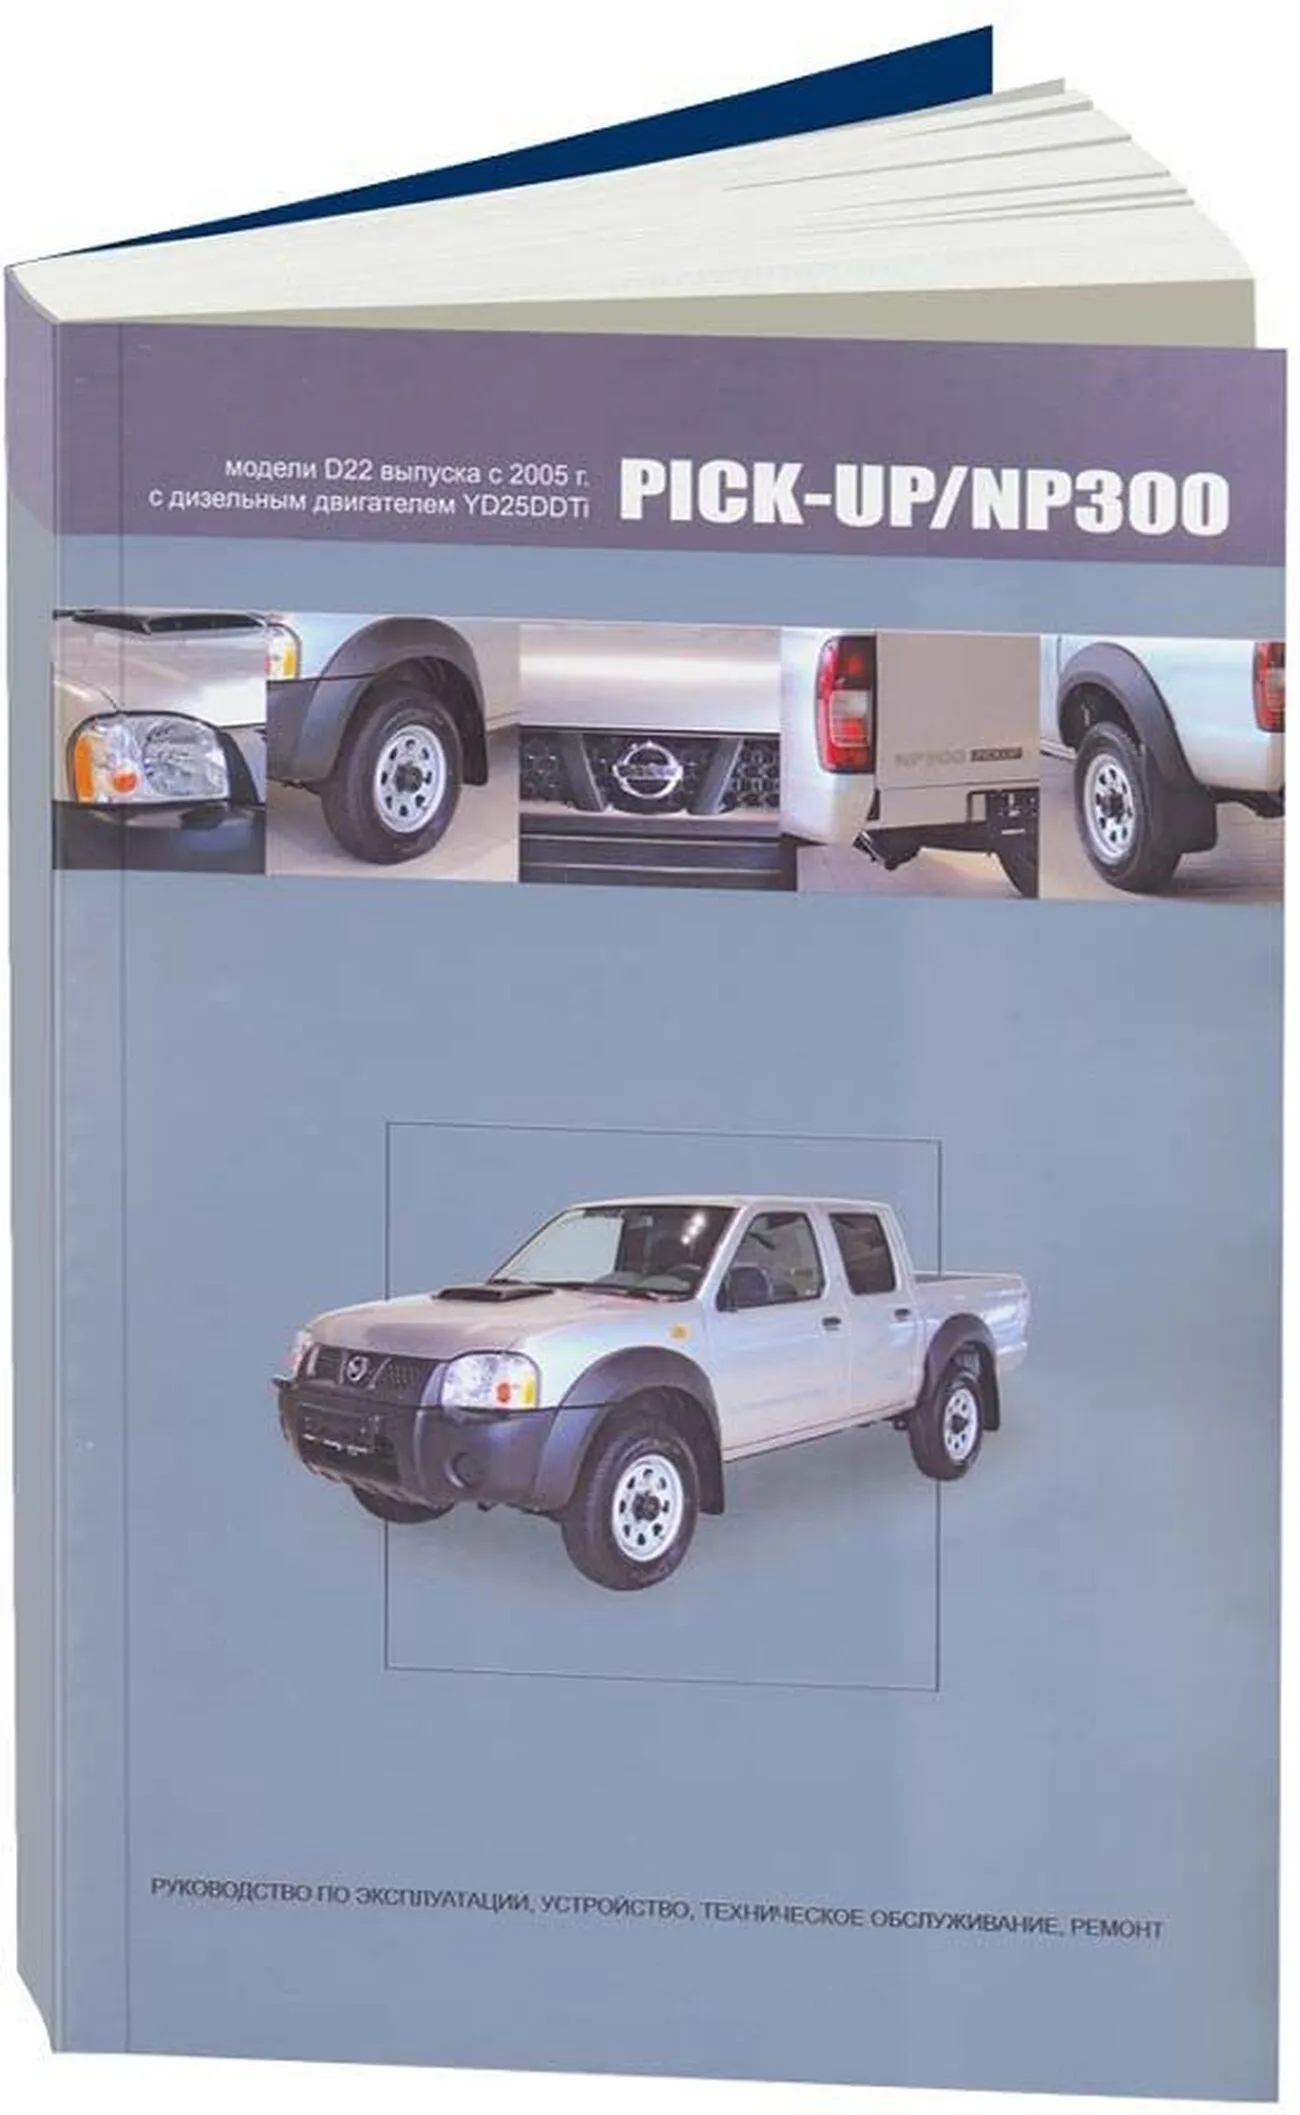 Книга: NISSAN PICK-UP / NP300  (д) с 2005 г.в., рем., экспл., то | Автонавигатор